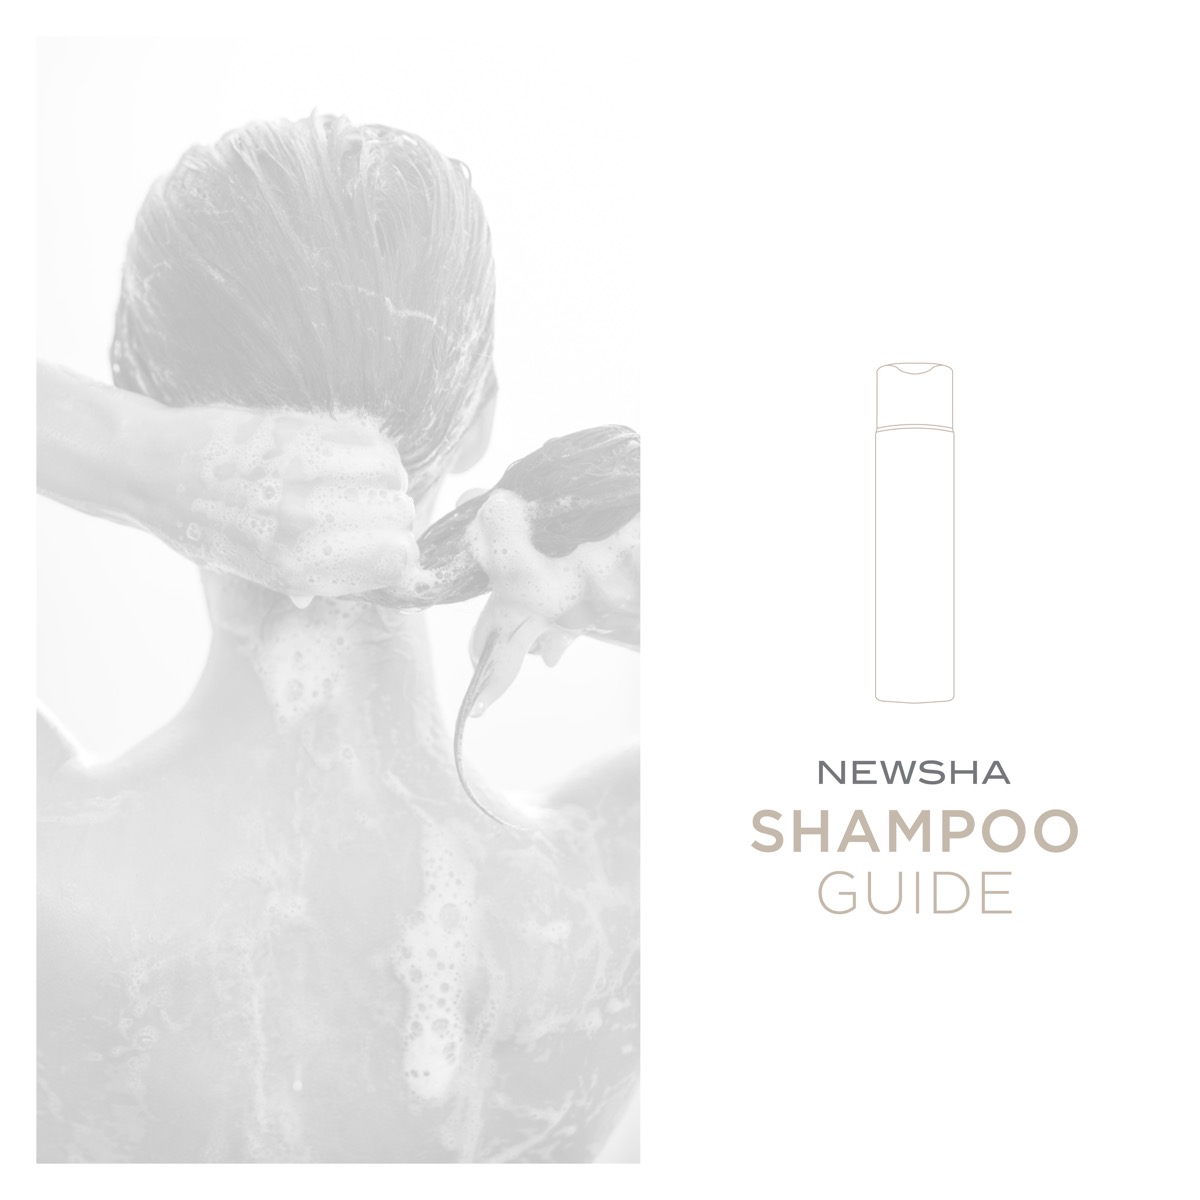 Der NEWSHA Shampoo Guide